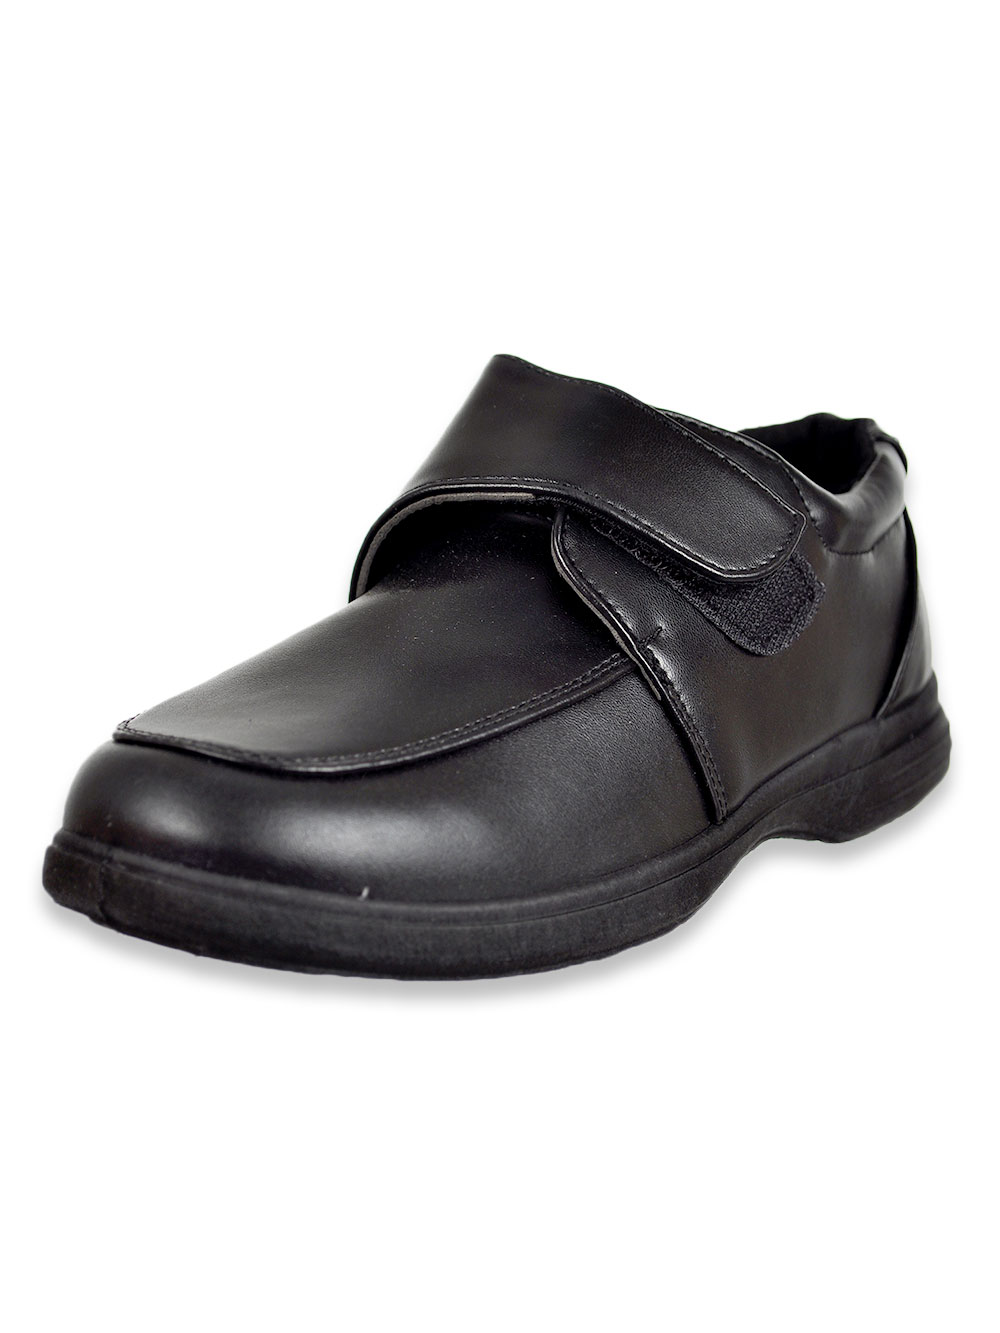 black school shoes for kids